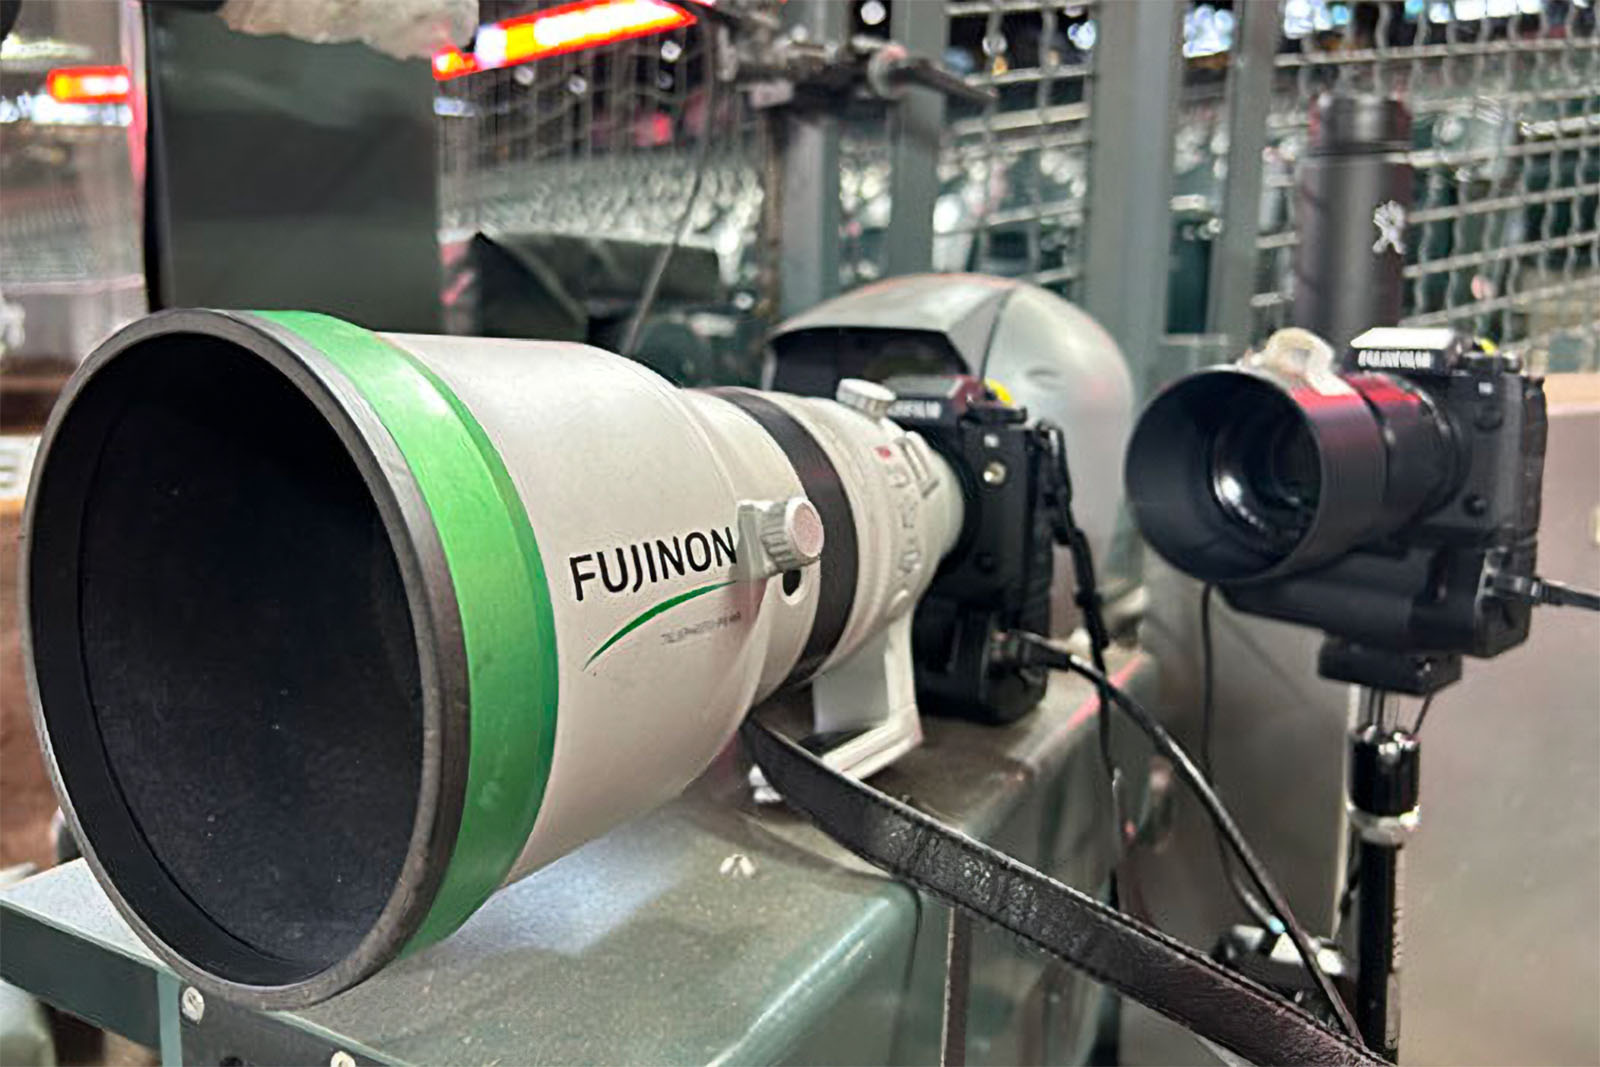 The FUJIFILM X-H2S with a Fujinon 200mm lens